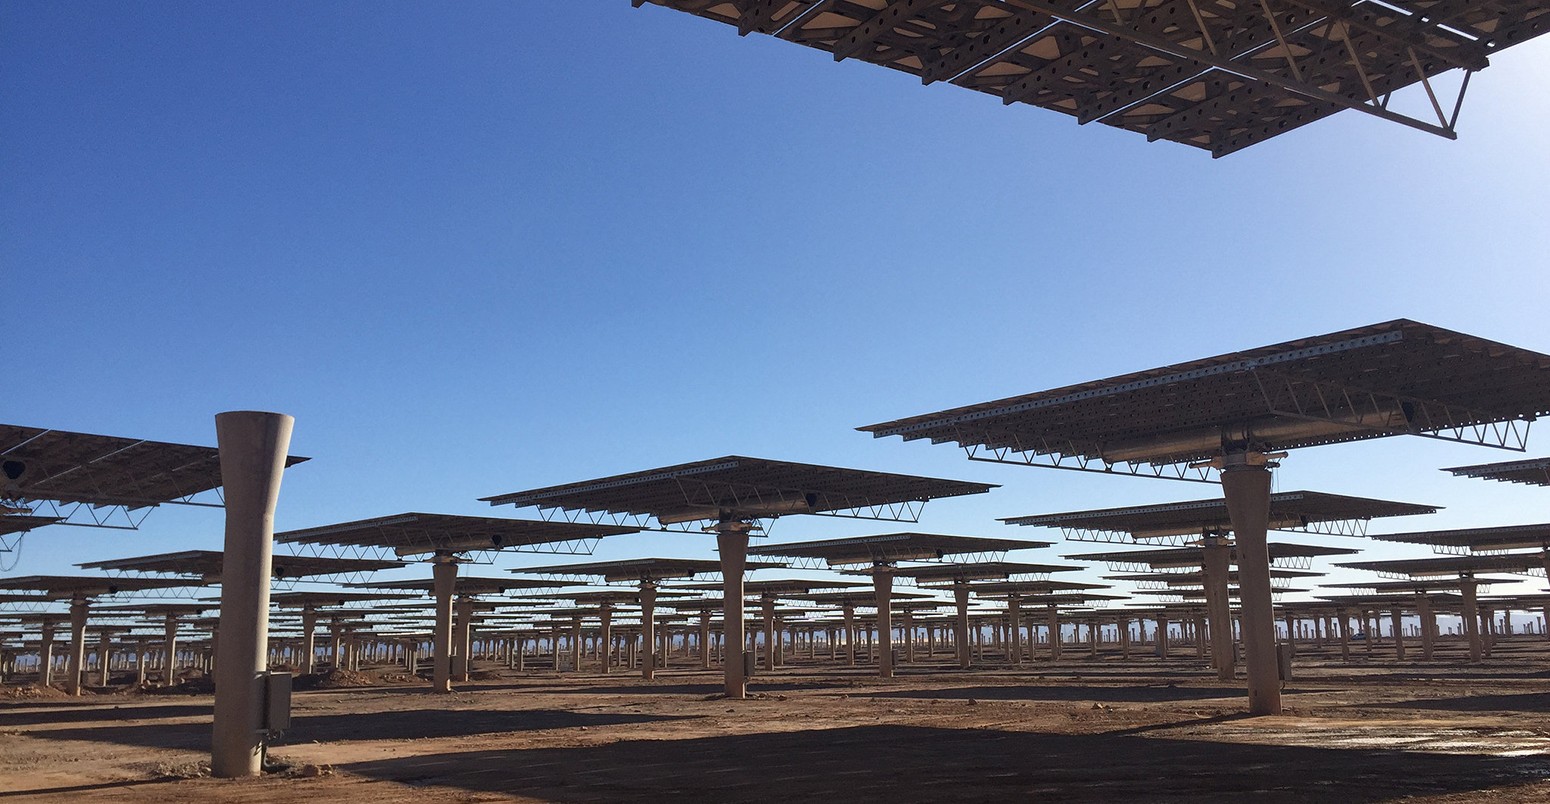 Morocco’s Noor-Ouarzazate solar complex